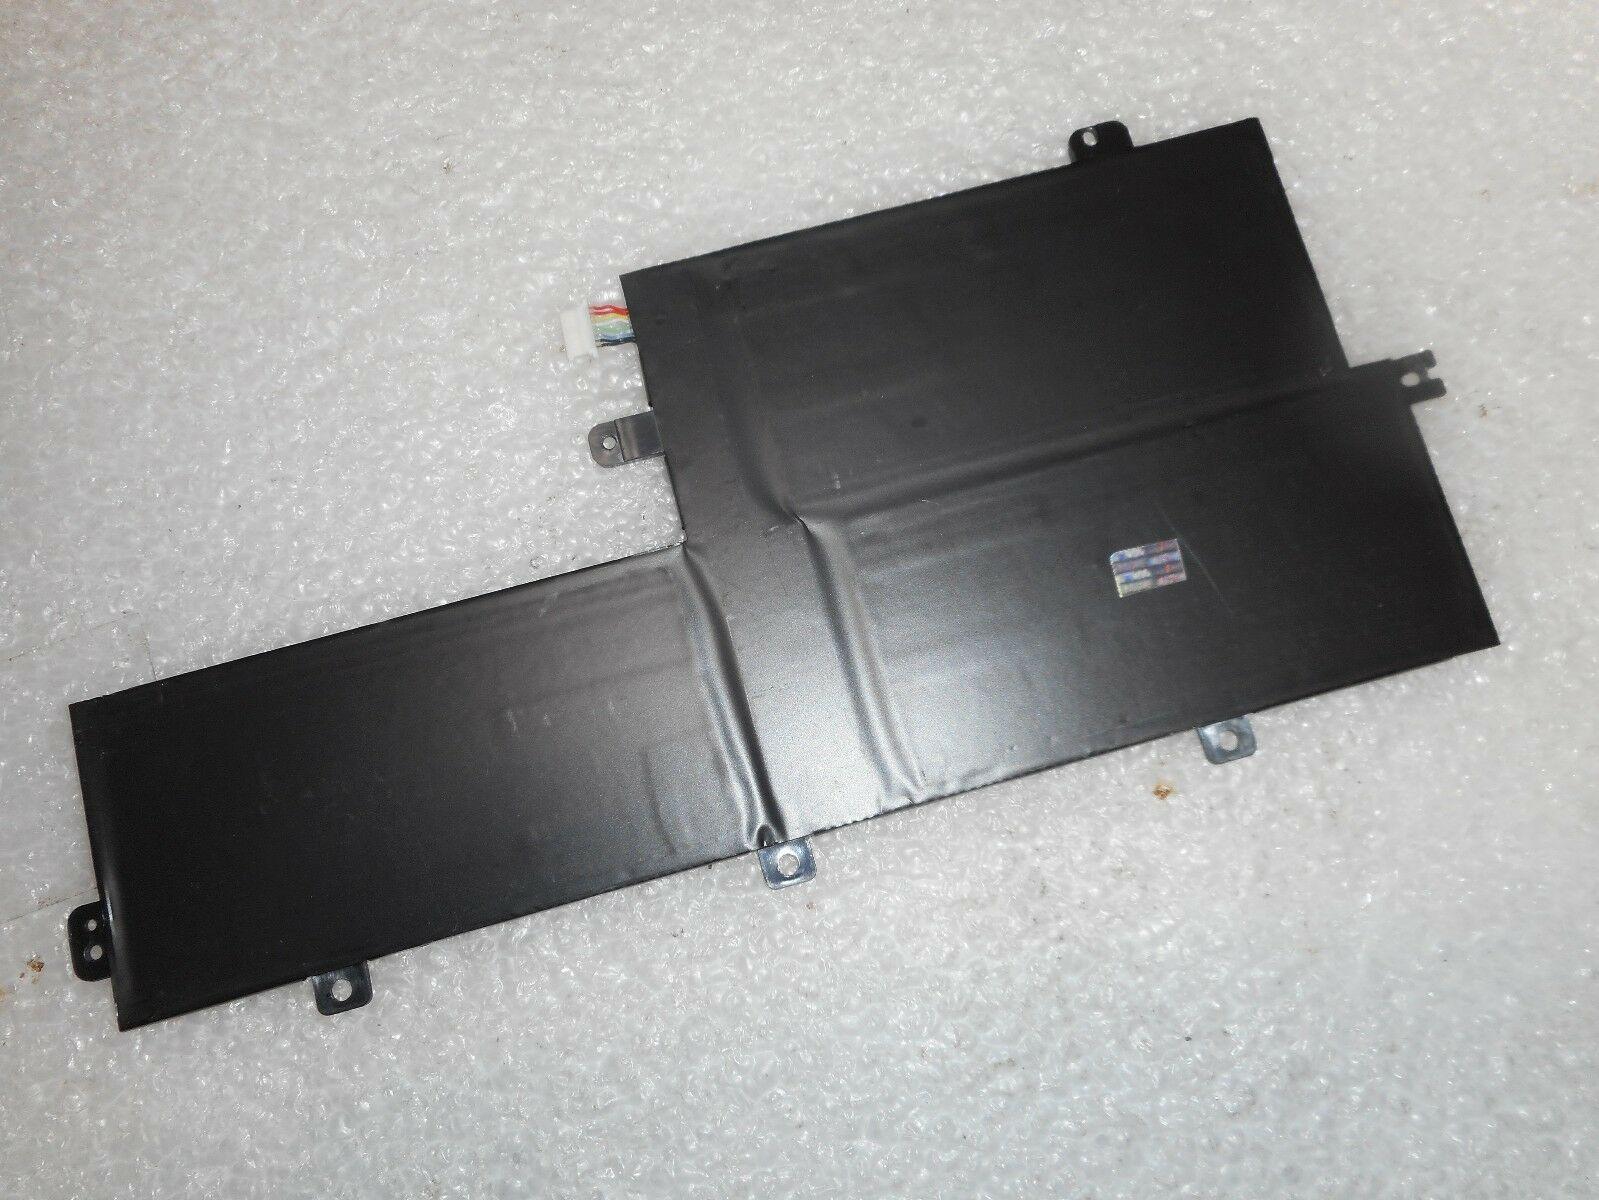 Original TR03XL Laptop Battery for HSTNN-DB5G HSTNN-IB5G 723922-1B1 723922-271 723922-2B1 Split X2 13-G